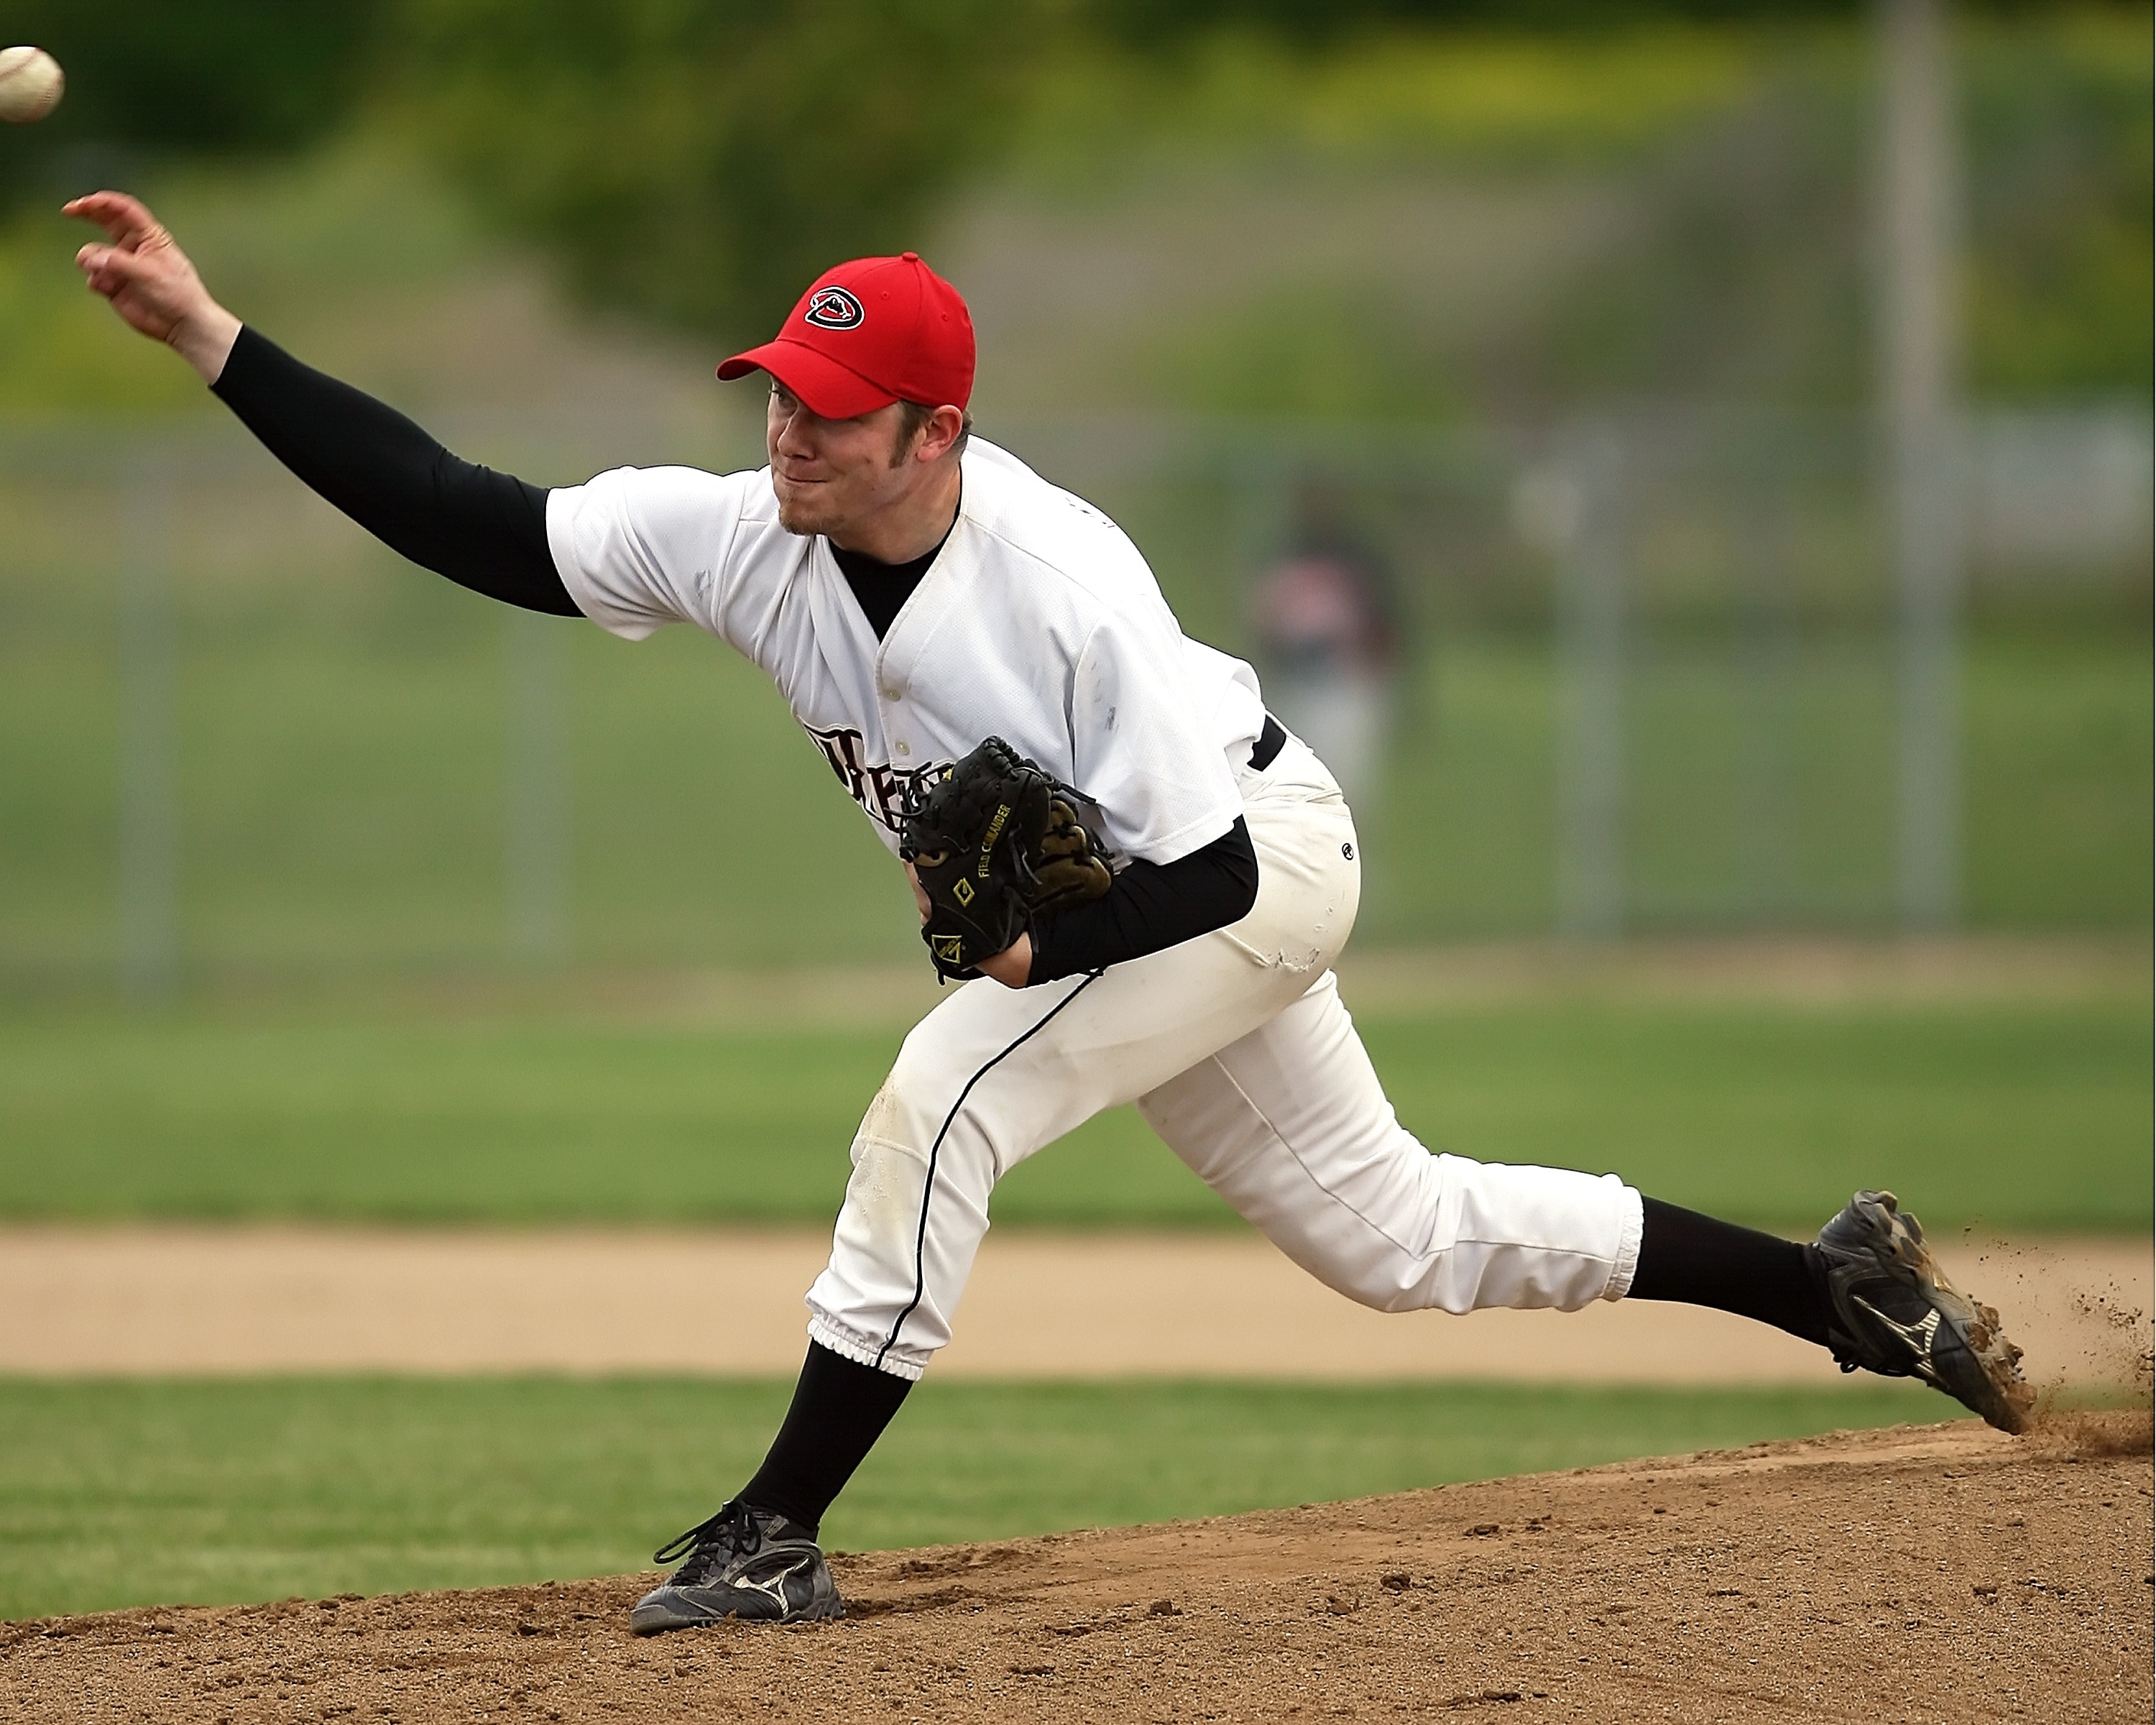 photo of a baseball player